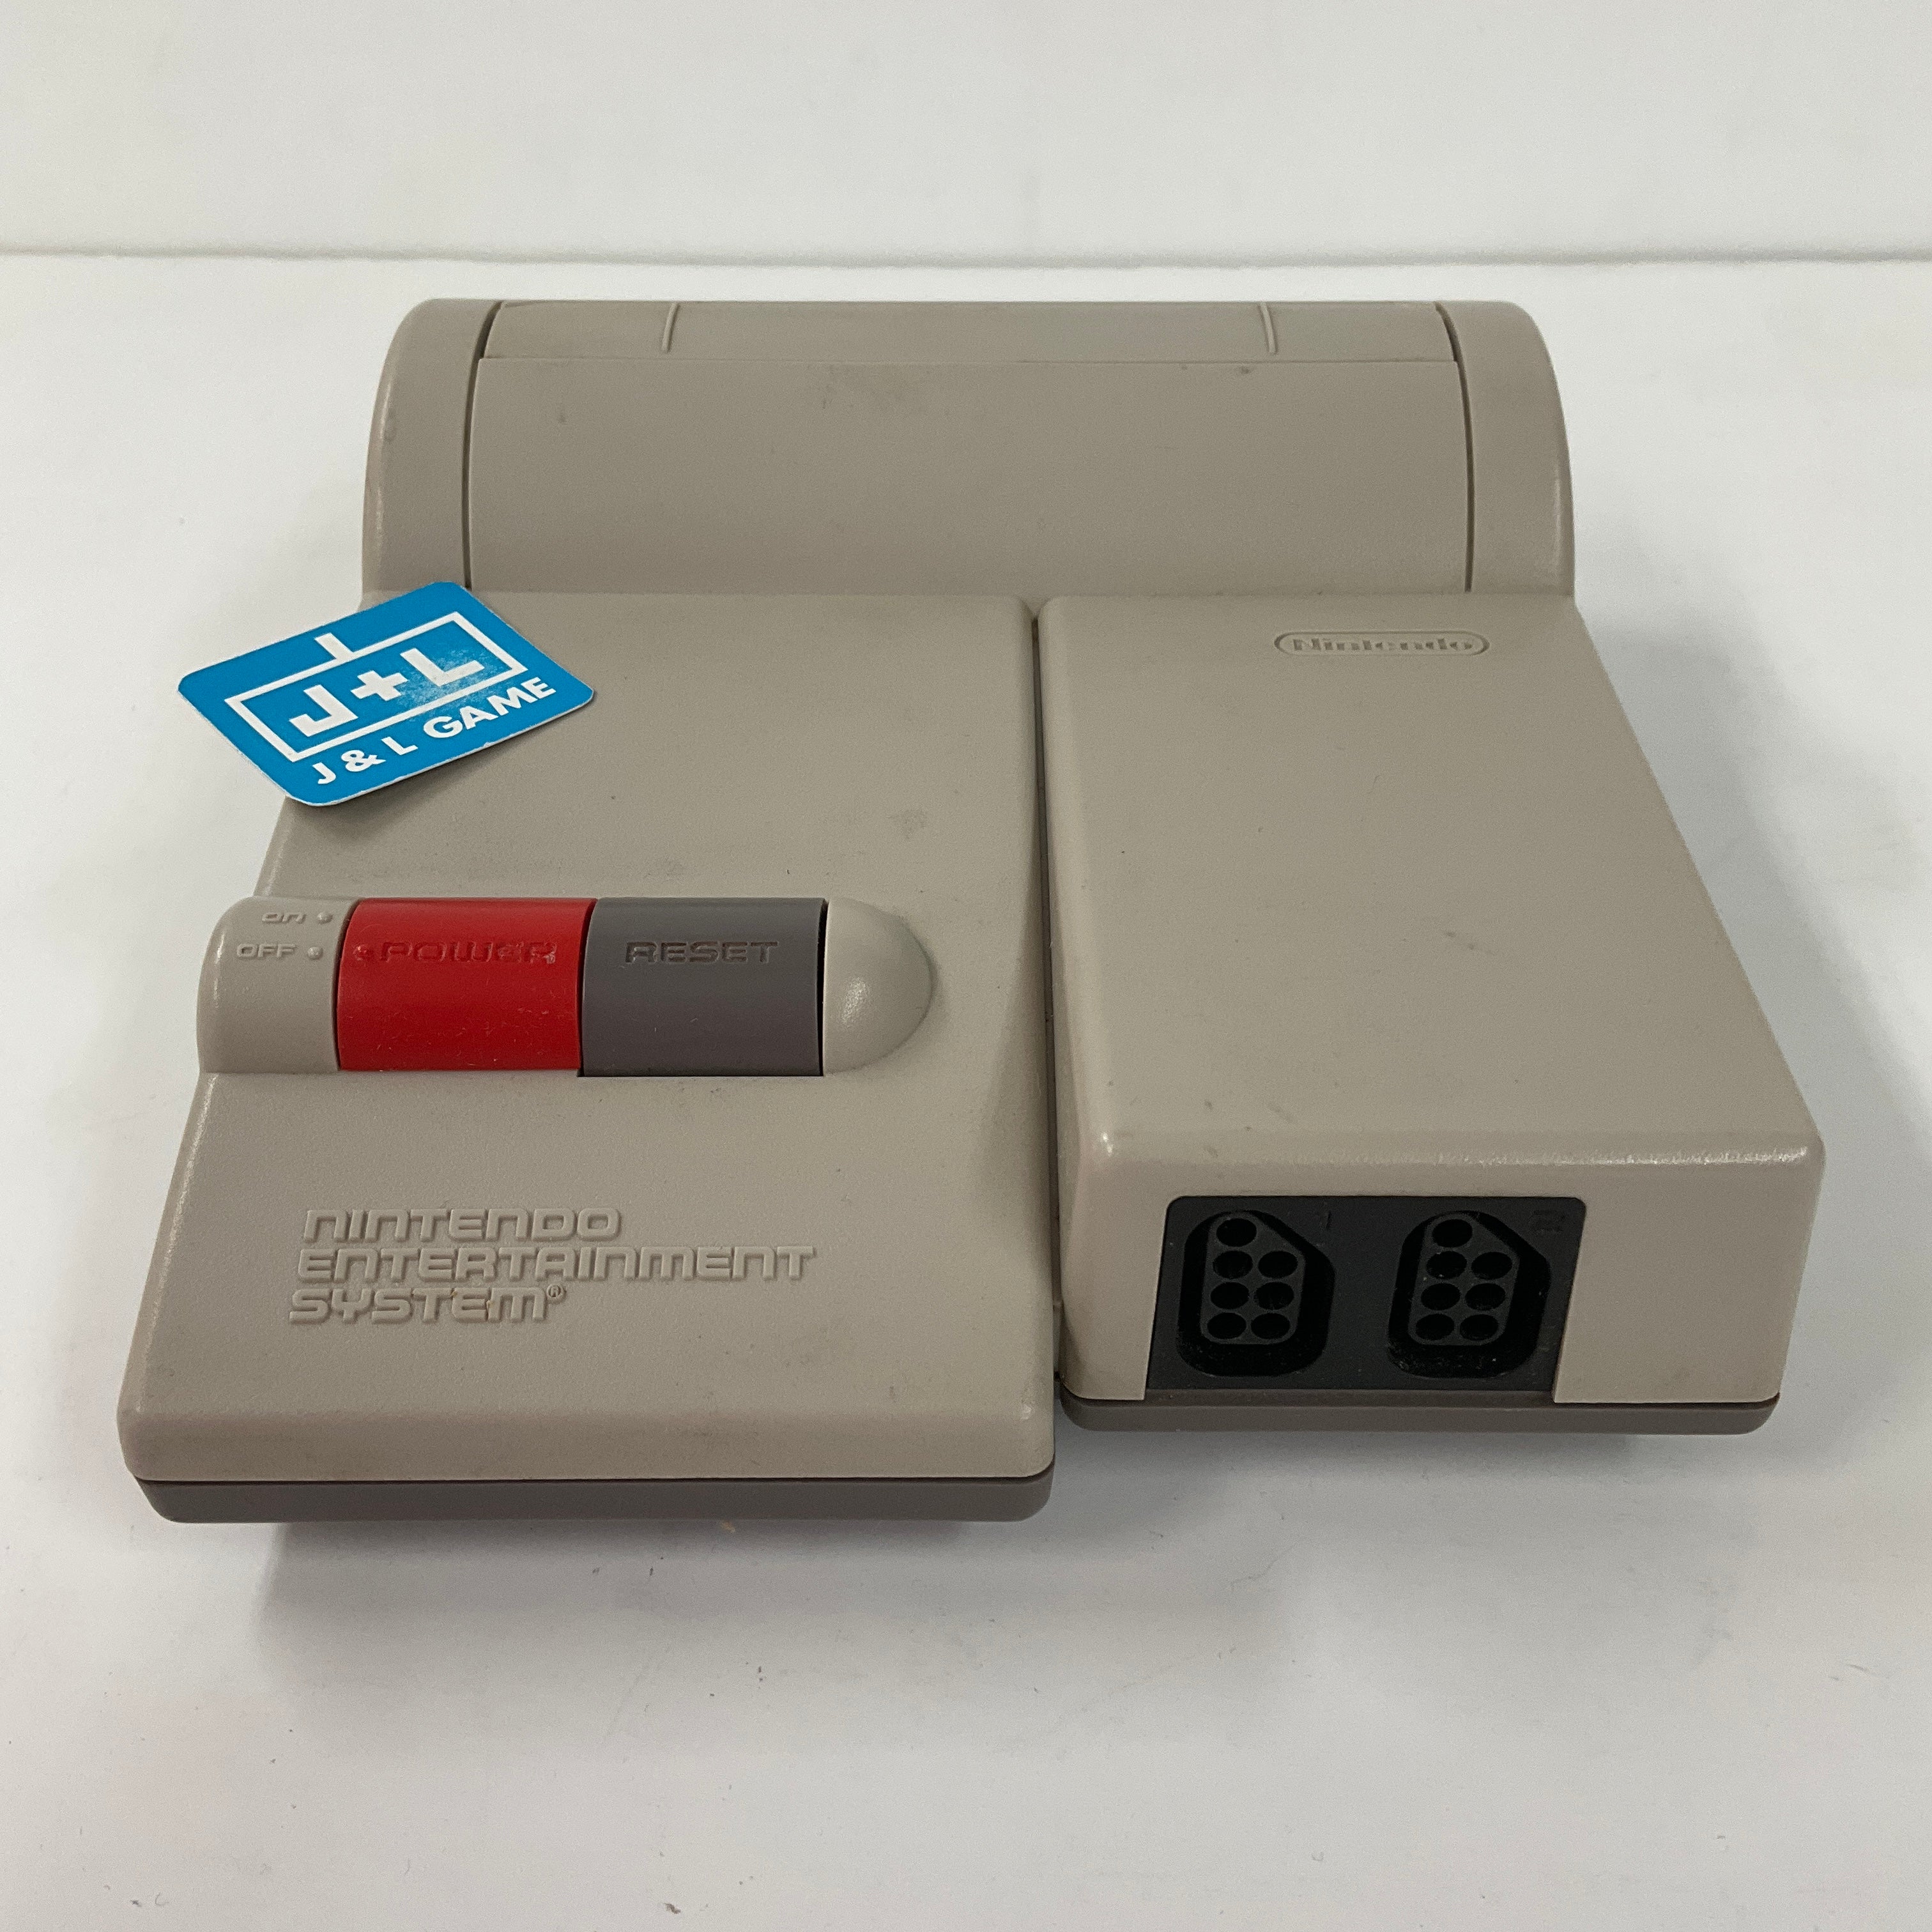 NES-101, Nintendo